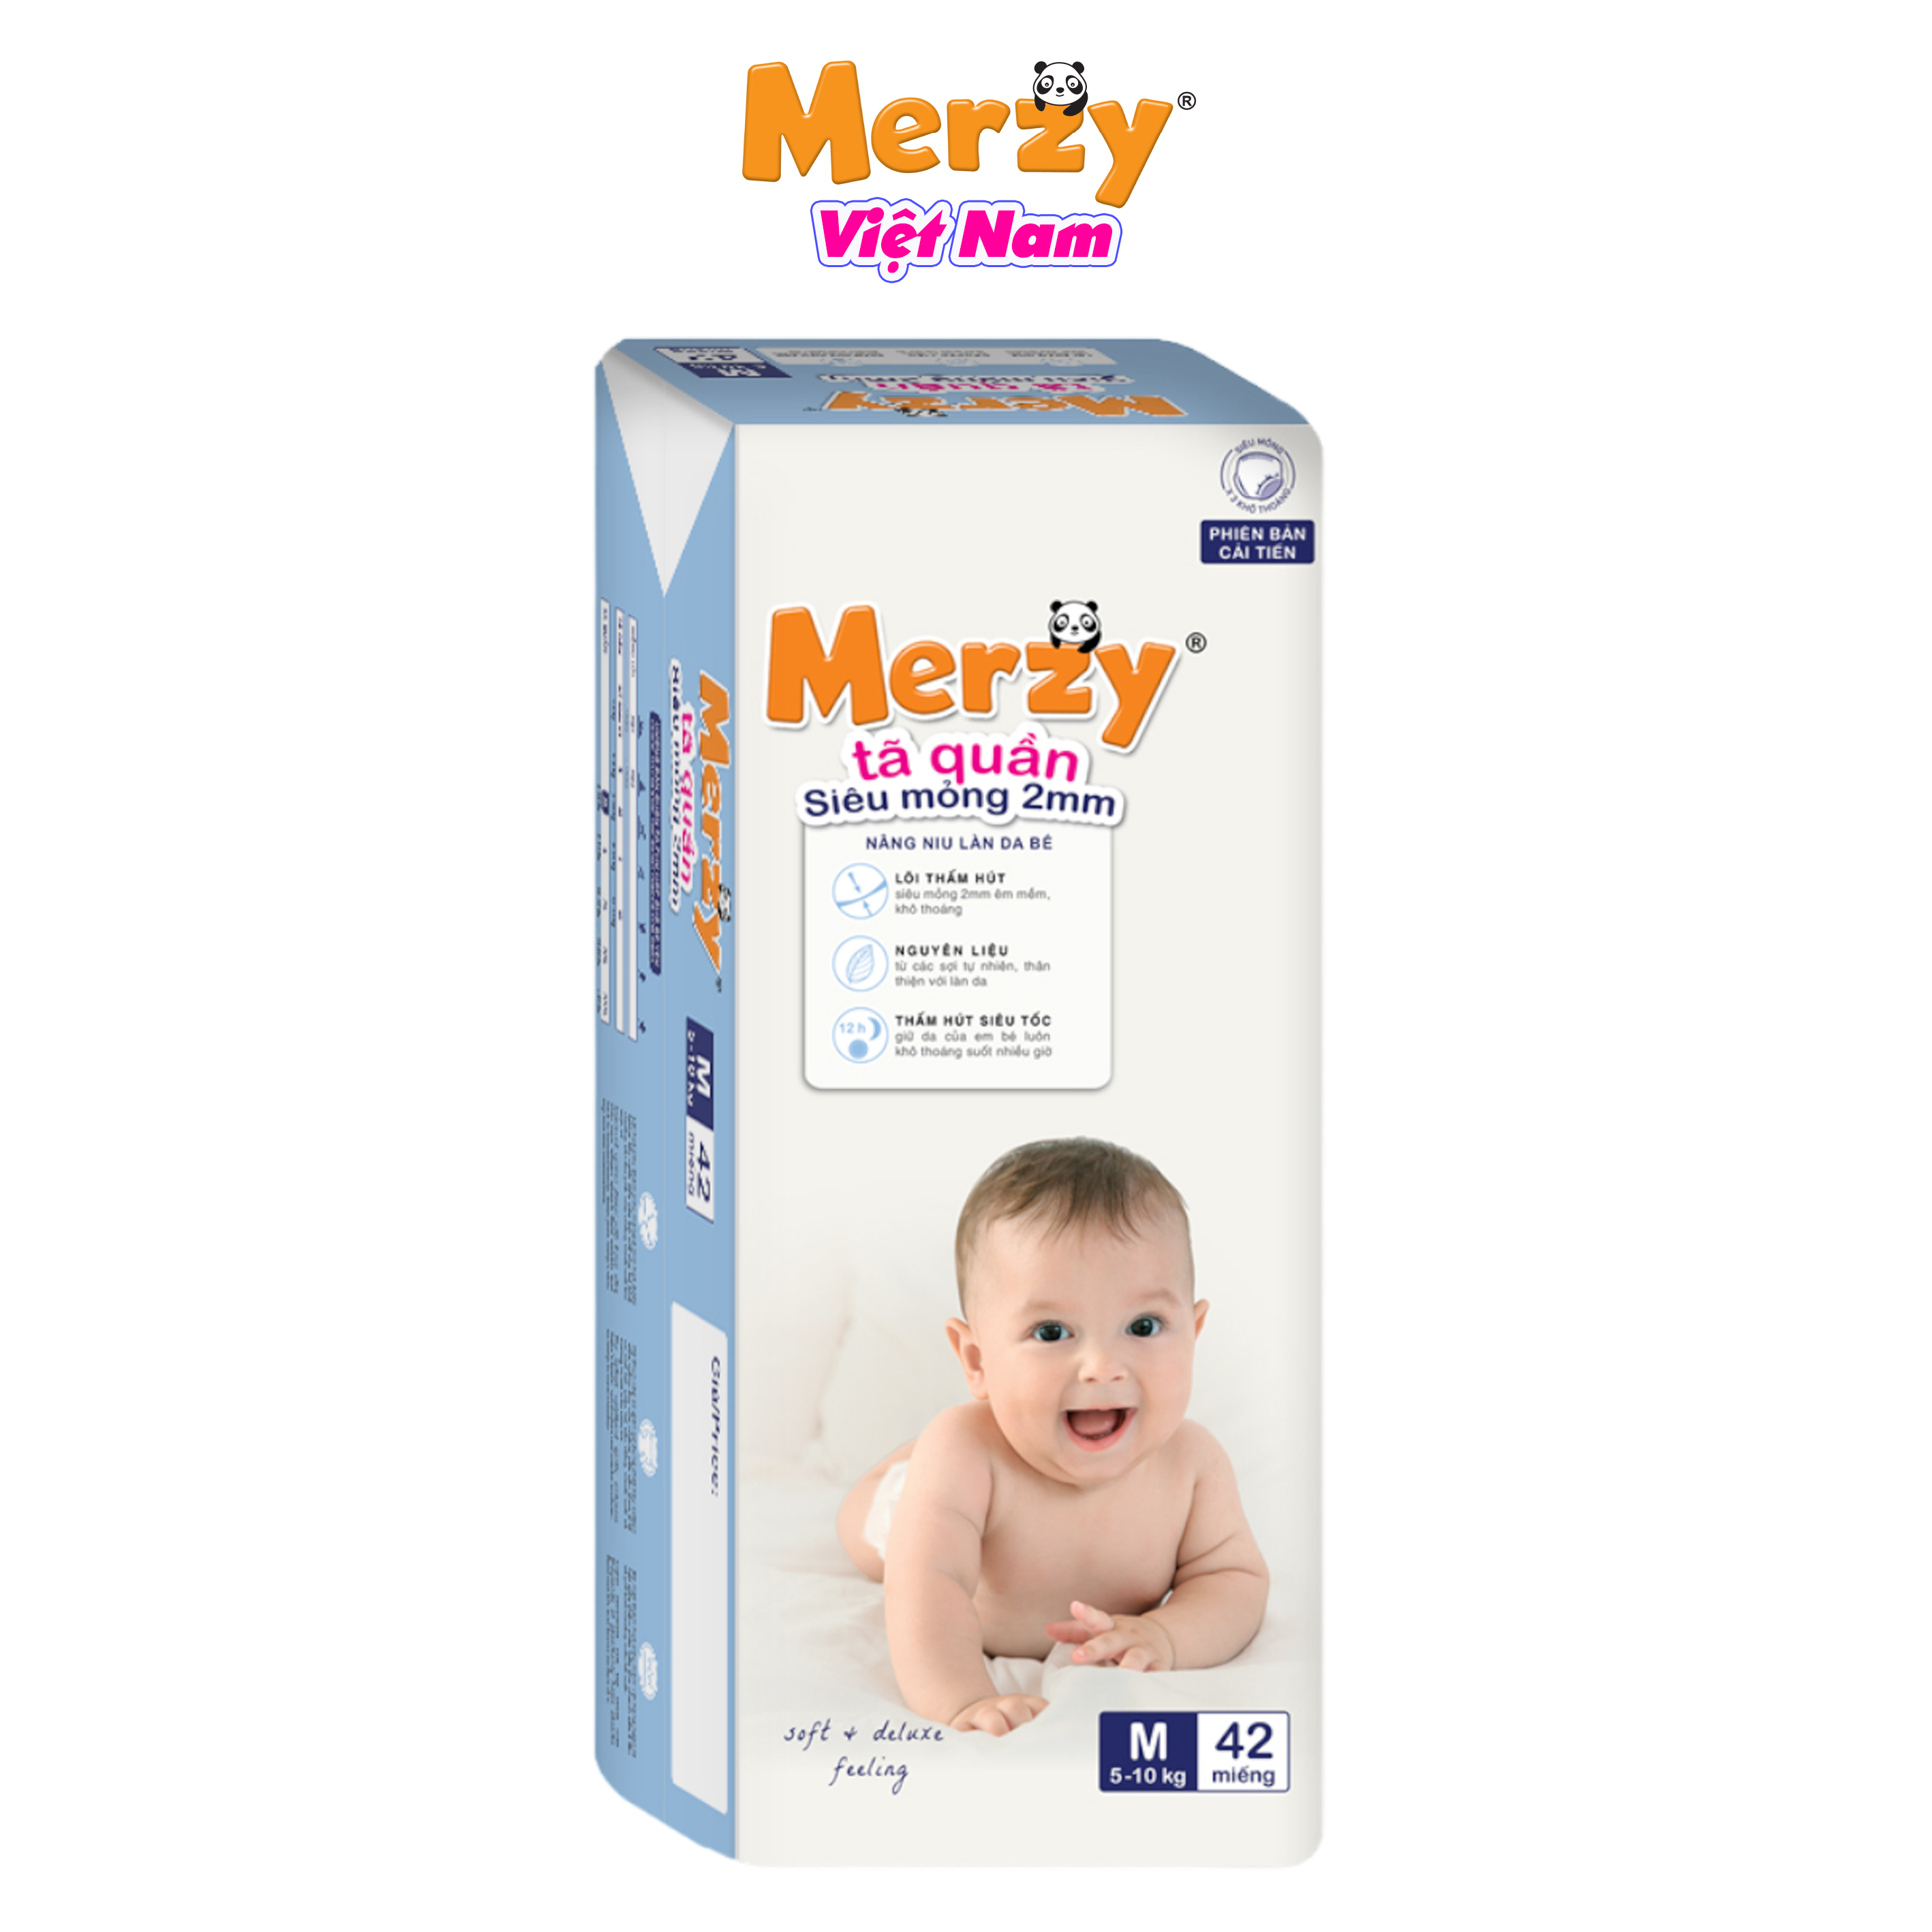 Merzy 2mm M42 L38 xl34 xxl30 super thin smooth surface baby urine pants